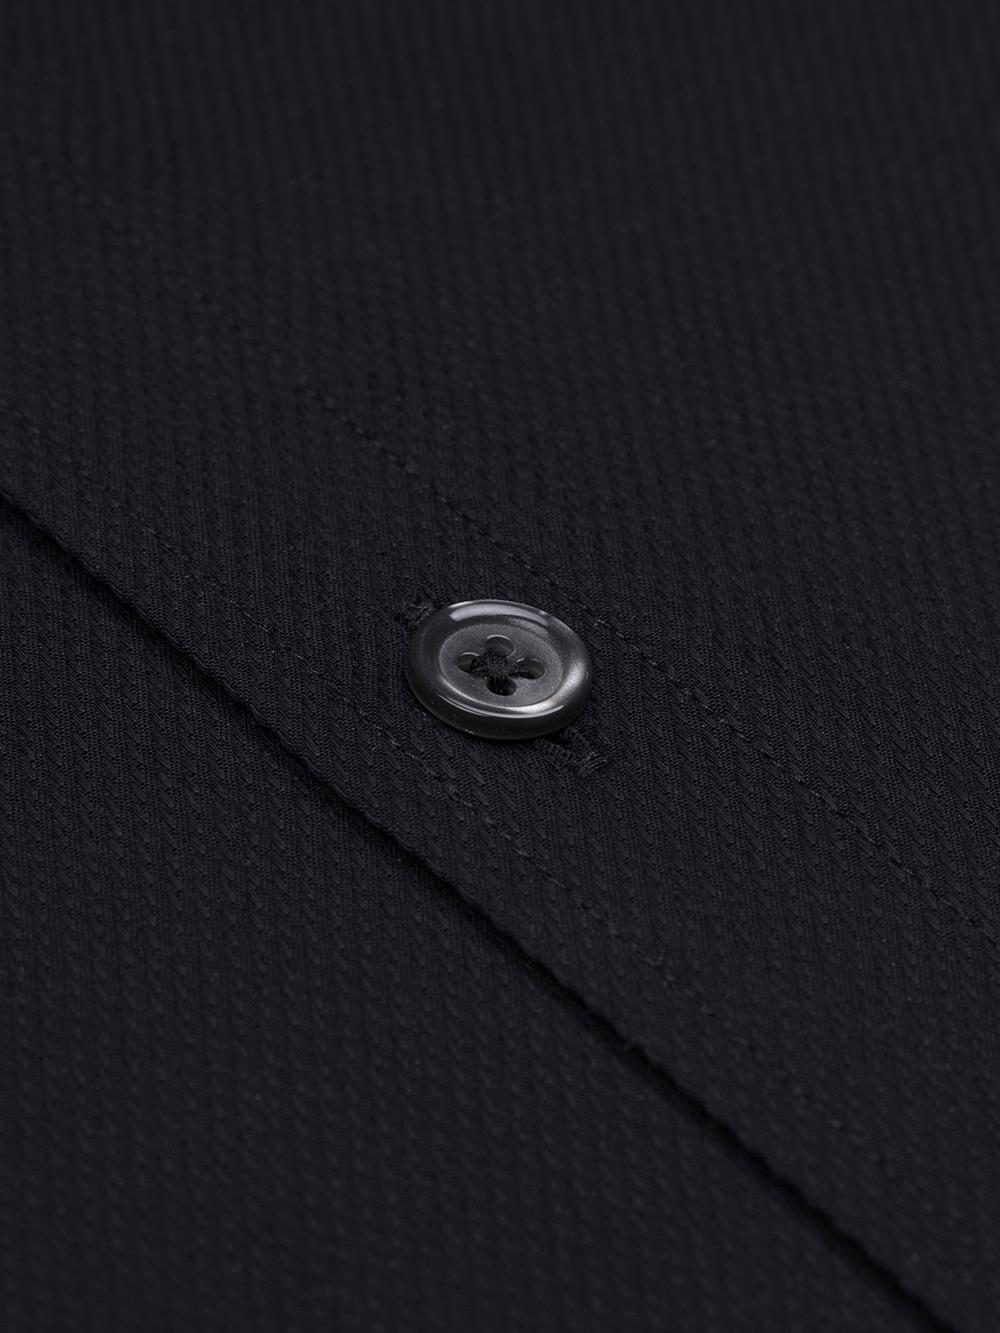 Black textured Tea slim fit shirt